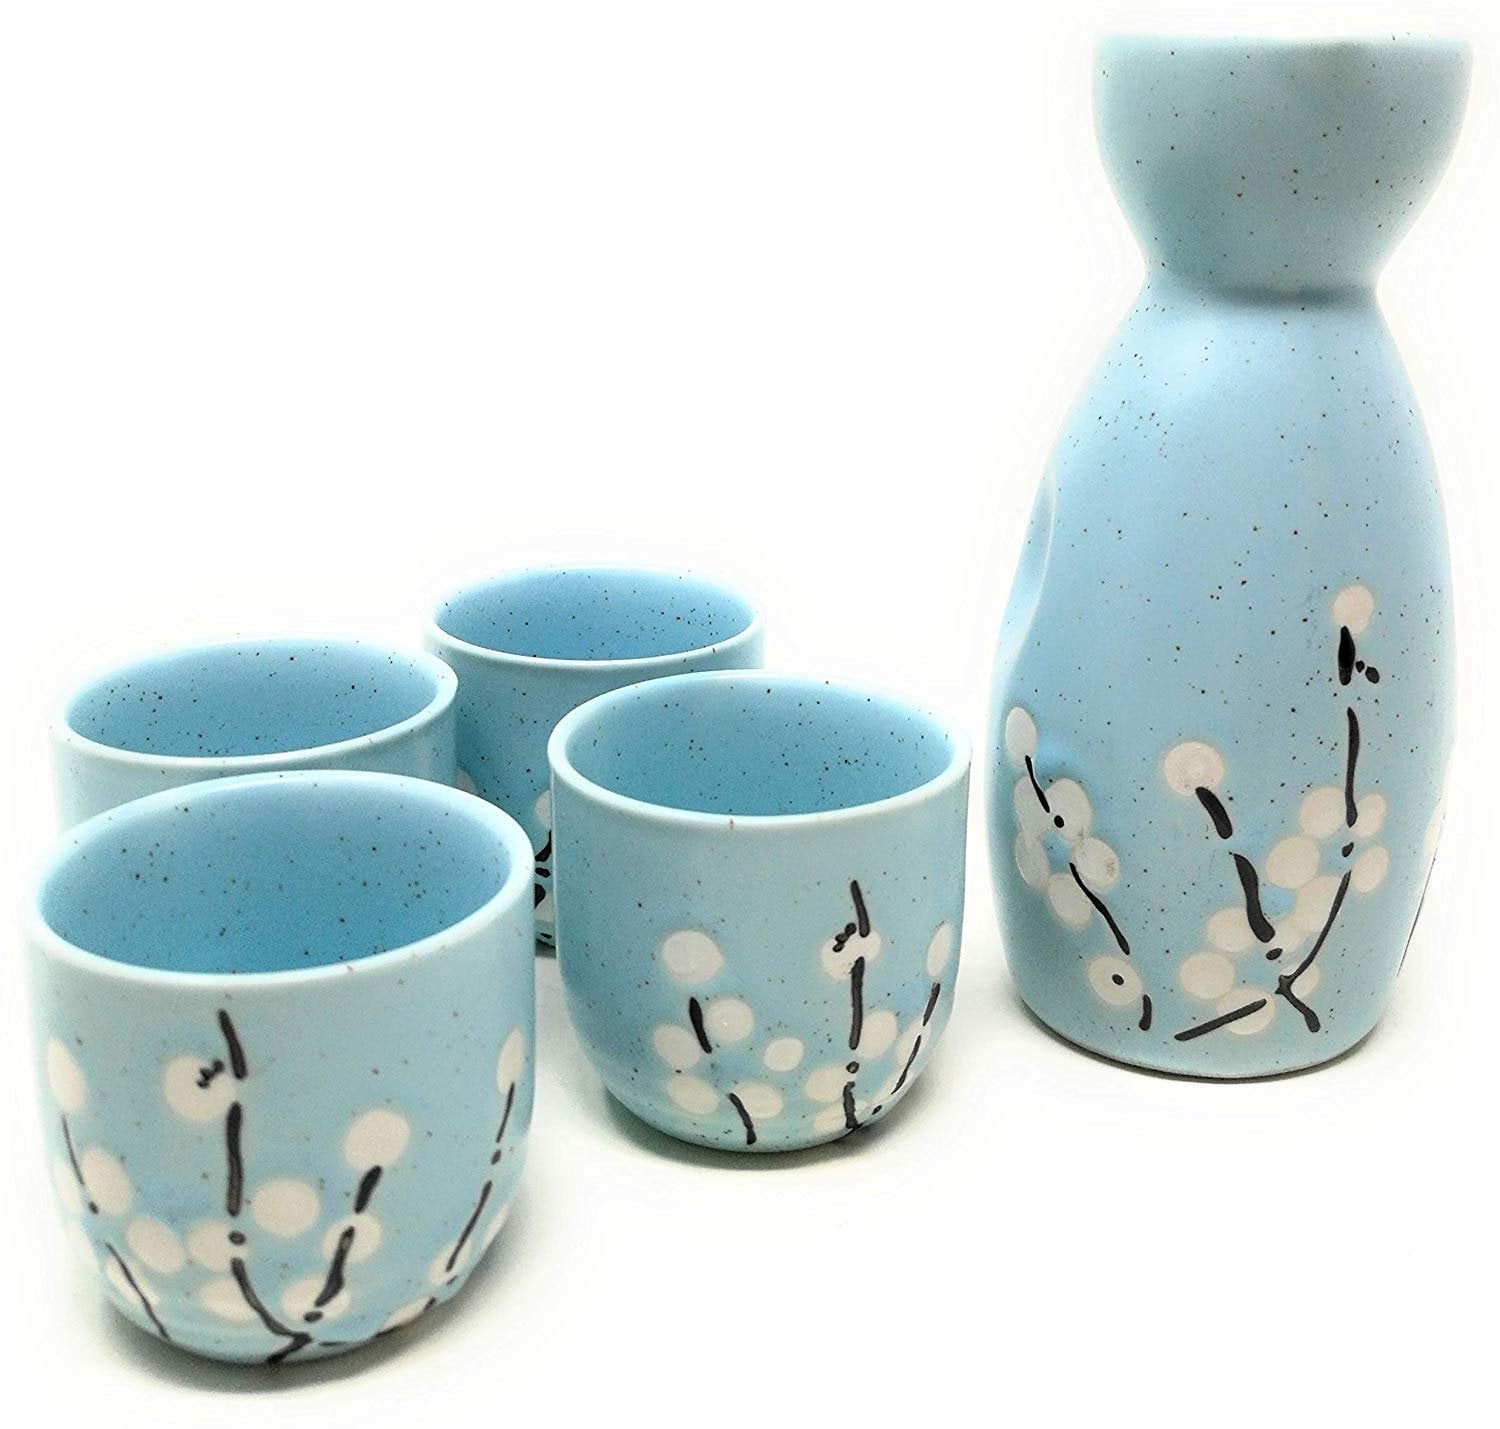 7 piece Japanese Sake Set With White/Blue Bamboo Design 5 cups & 2 bottles 